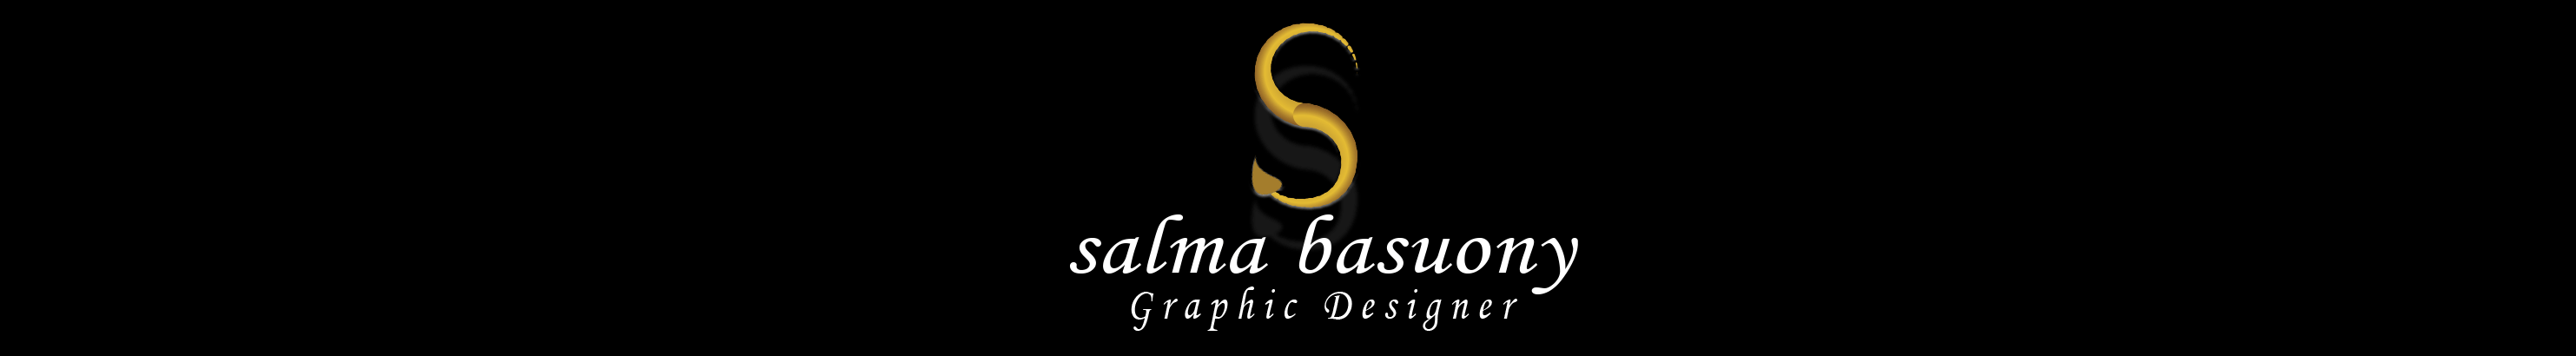 Salma Basuony's profile banner